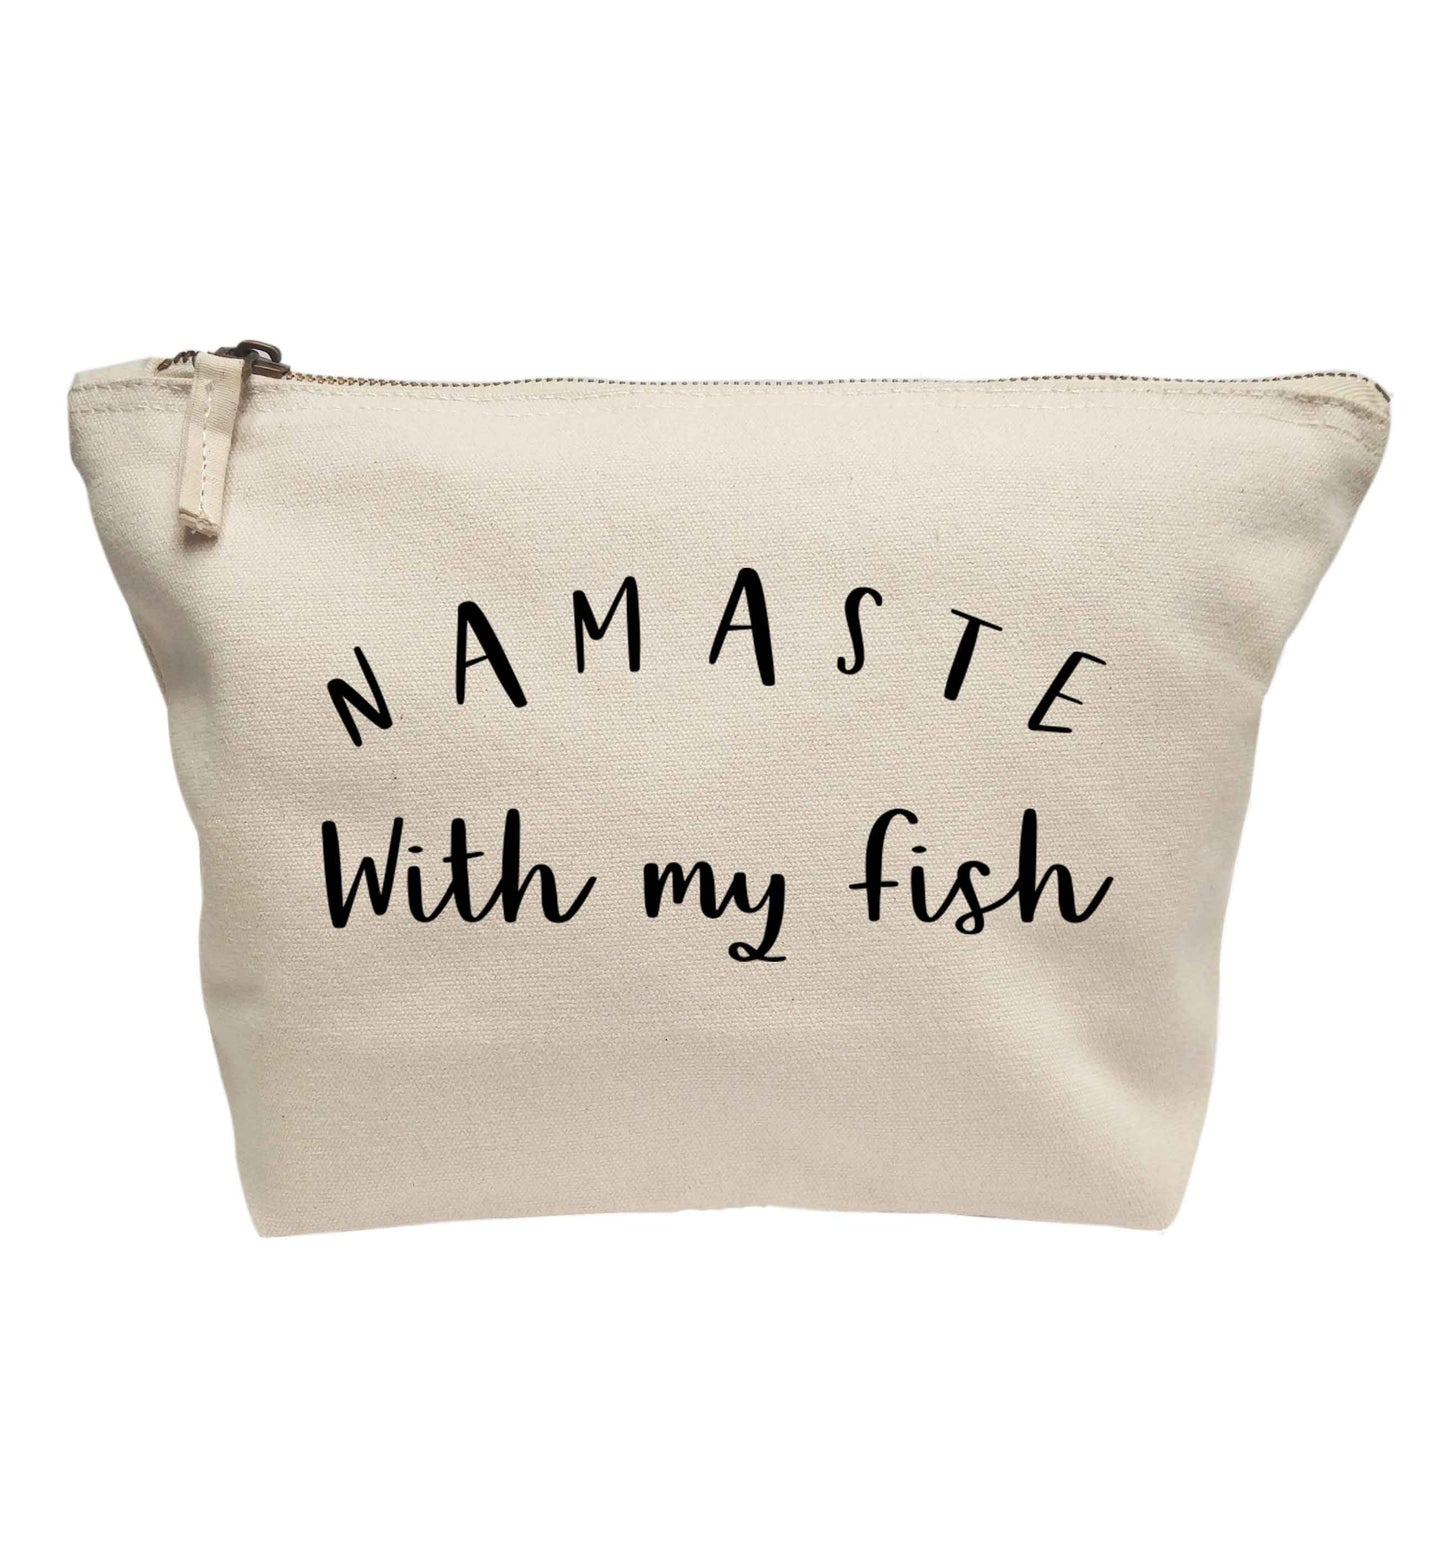 Namaste with my fish | makeup / wash bag